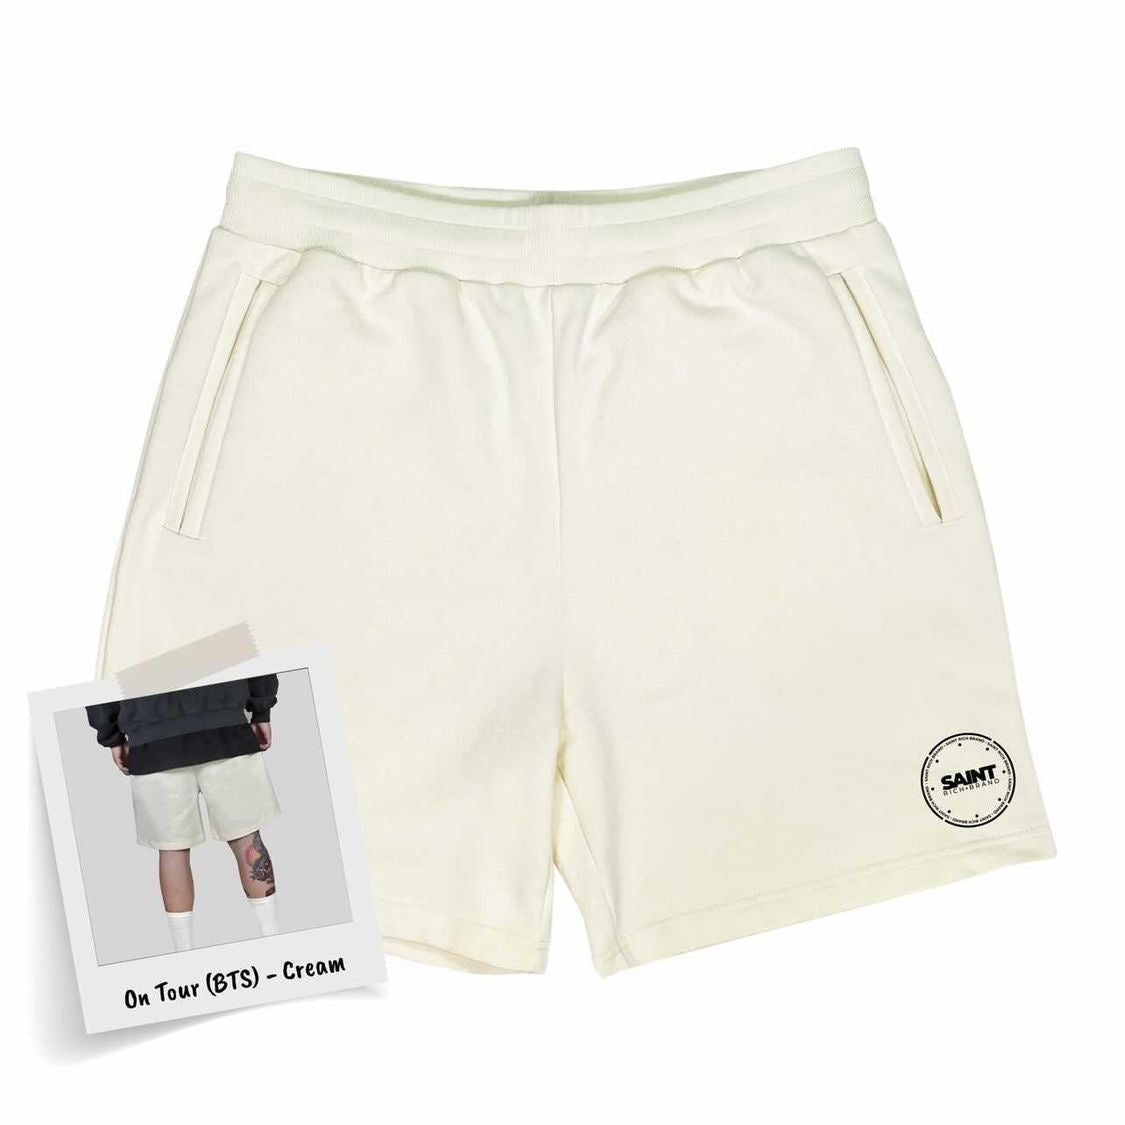 S1:E1 Lux Street Wear: Rich On Brand – Saint Shorts Tour